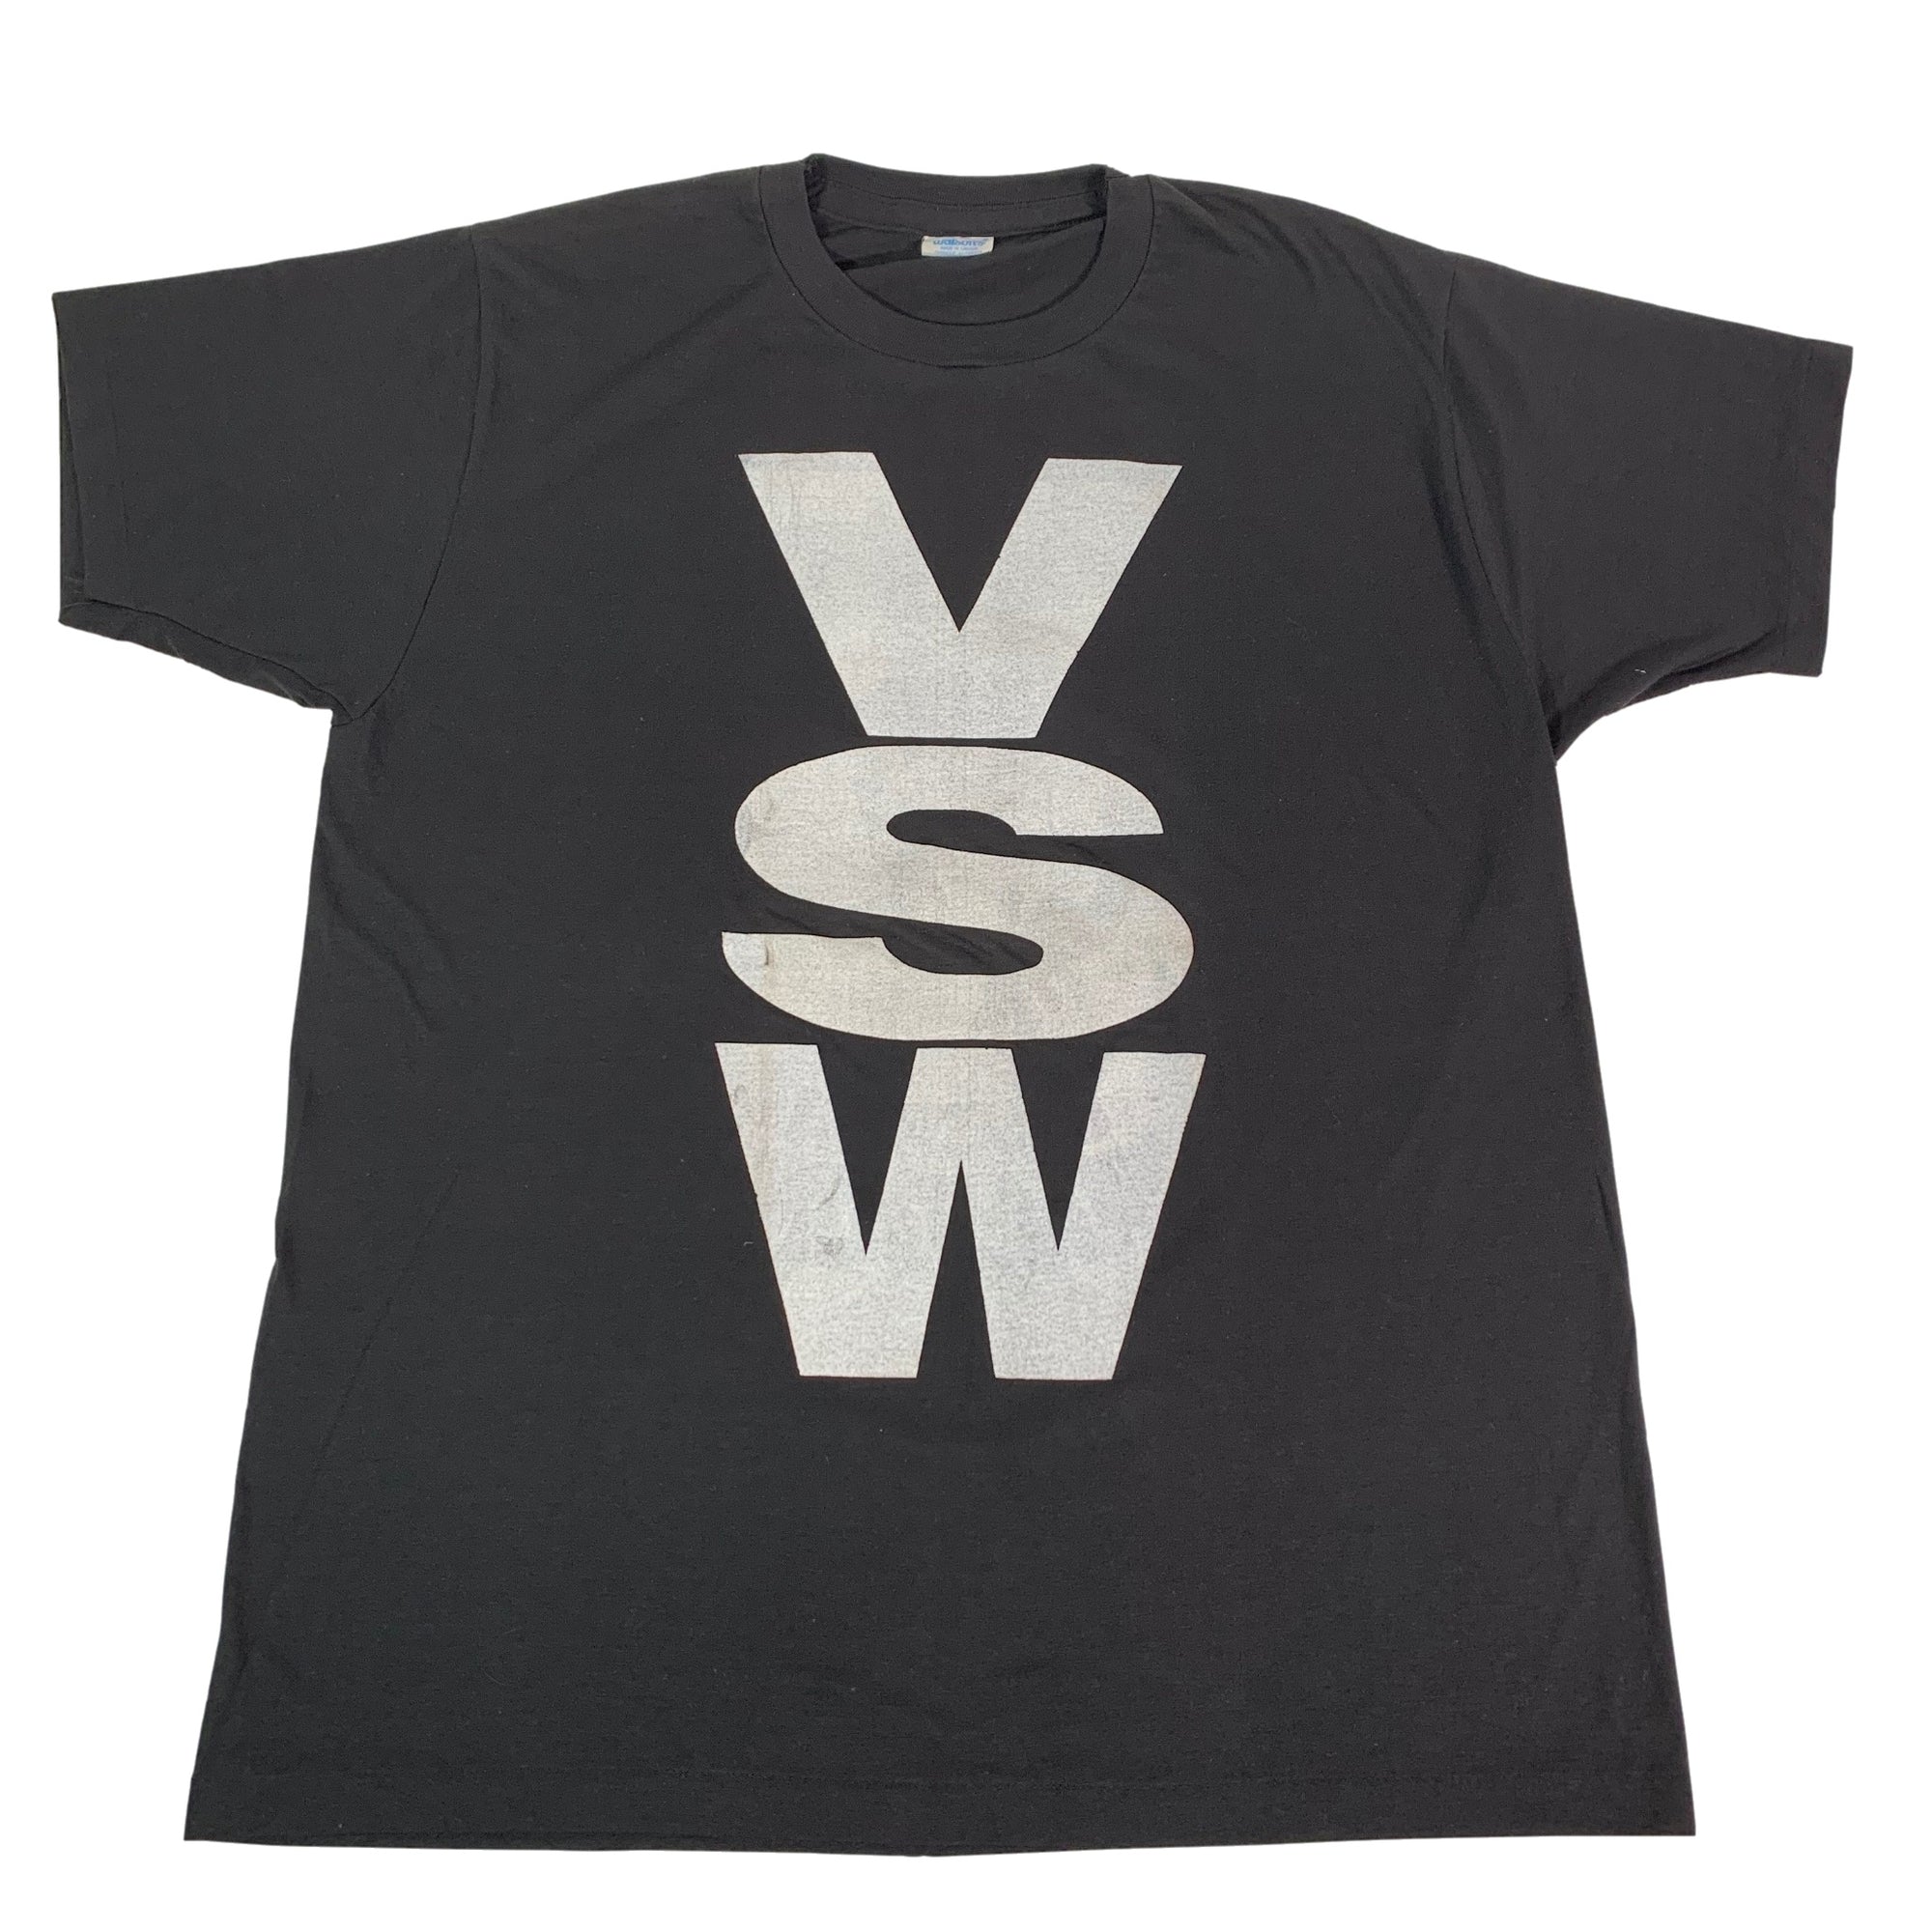 Vintage Vision Street Wear "VSW" T-Shirt - jointcustodydc